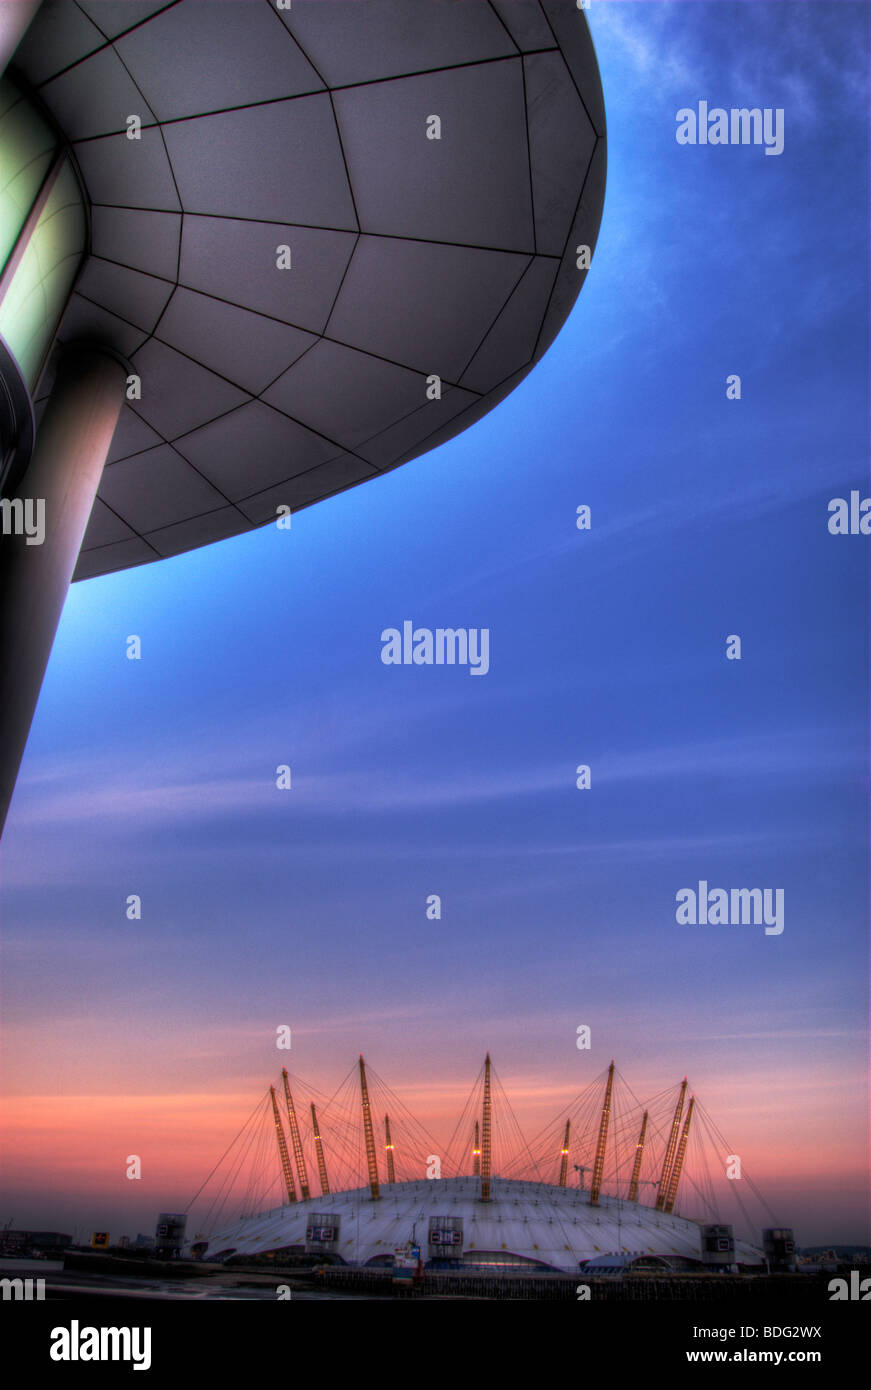 HDR - High Dynamic Range image looking towards the O2 concert arena, London, England, UK Stock Photo